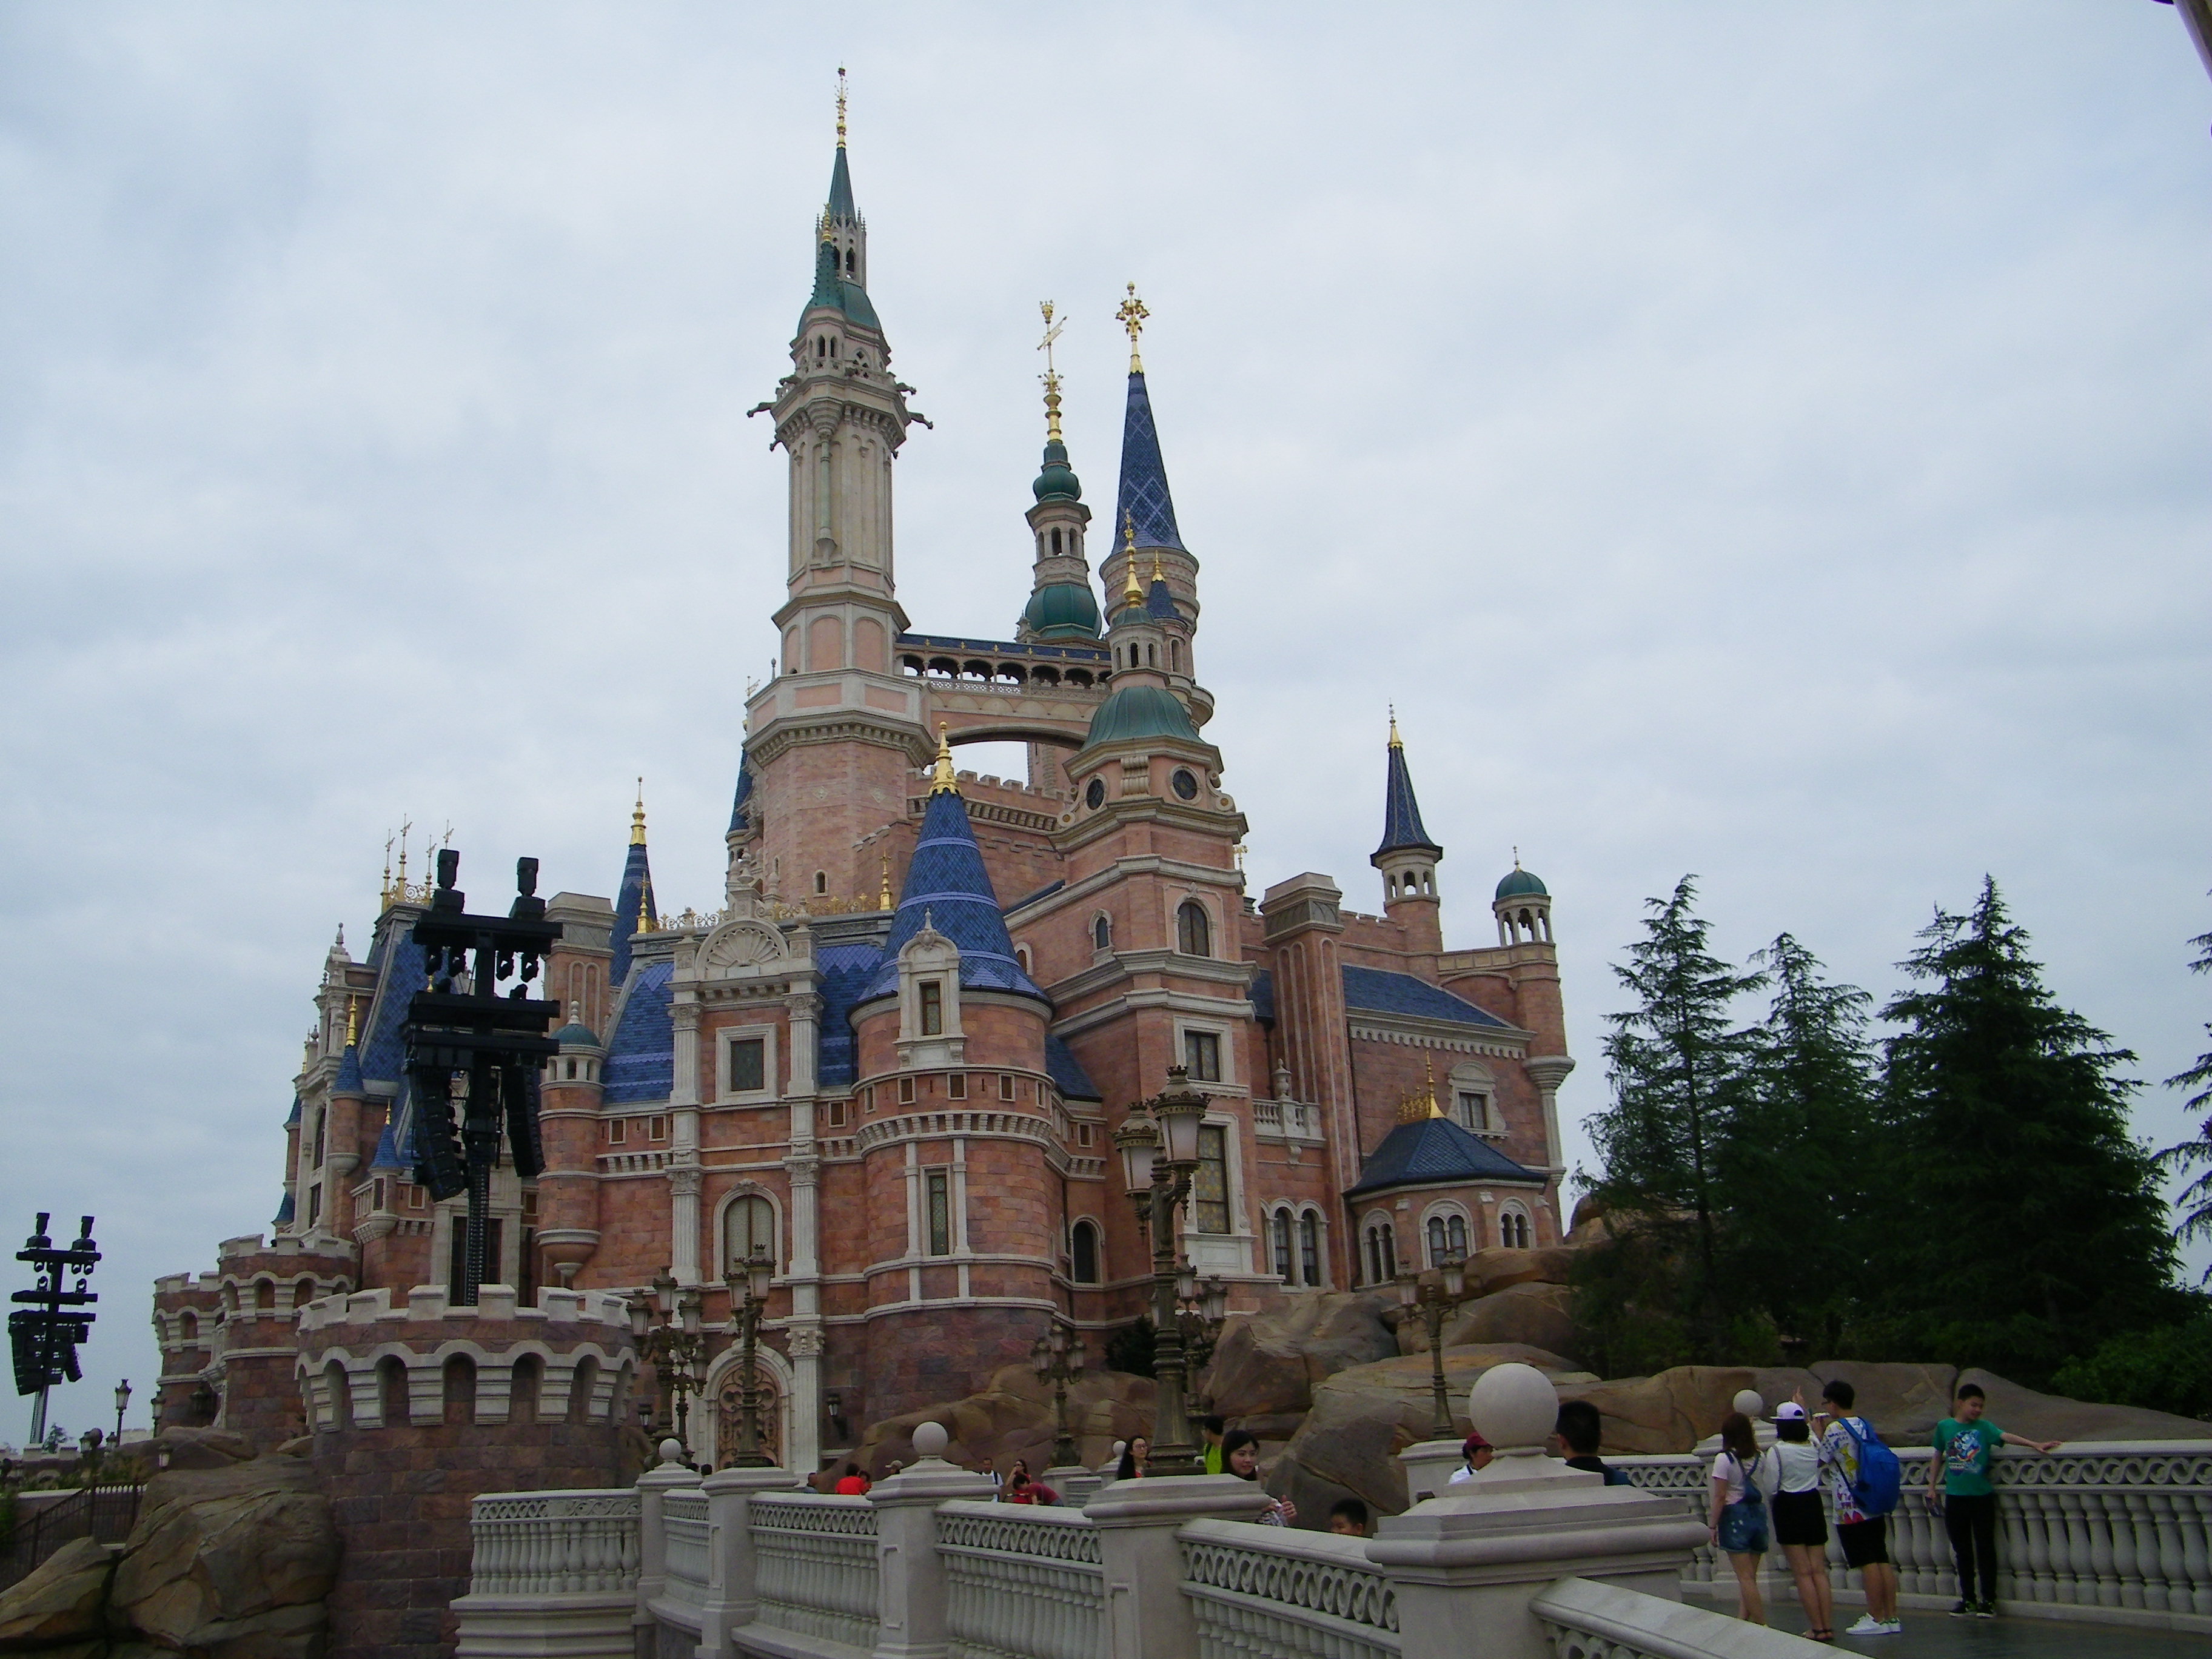 Enchanted Storybook Castle, Shangai